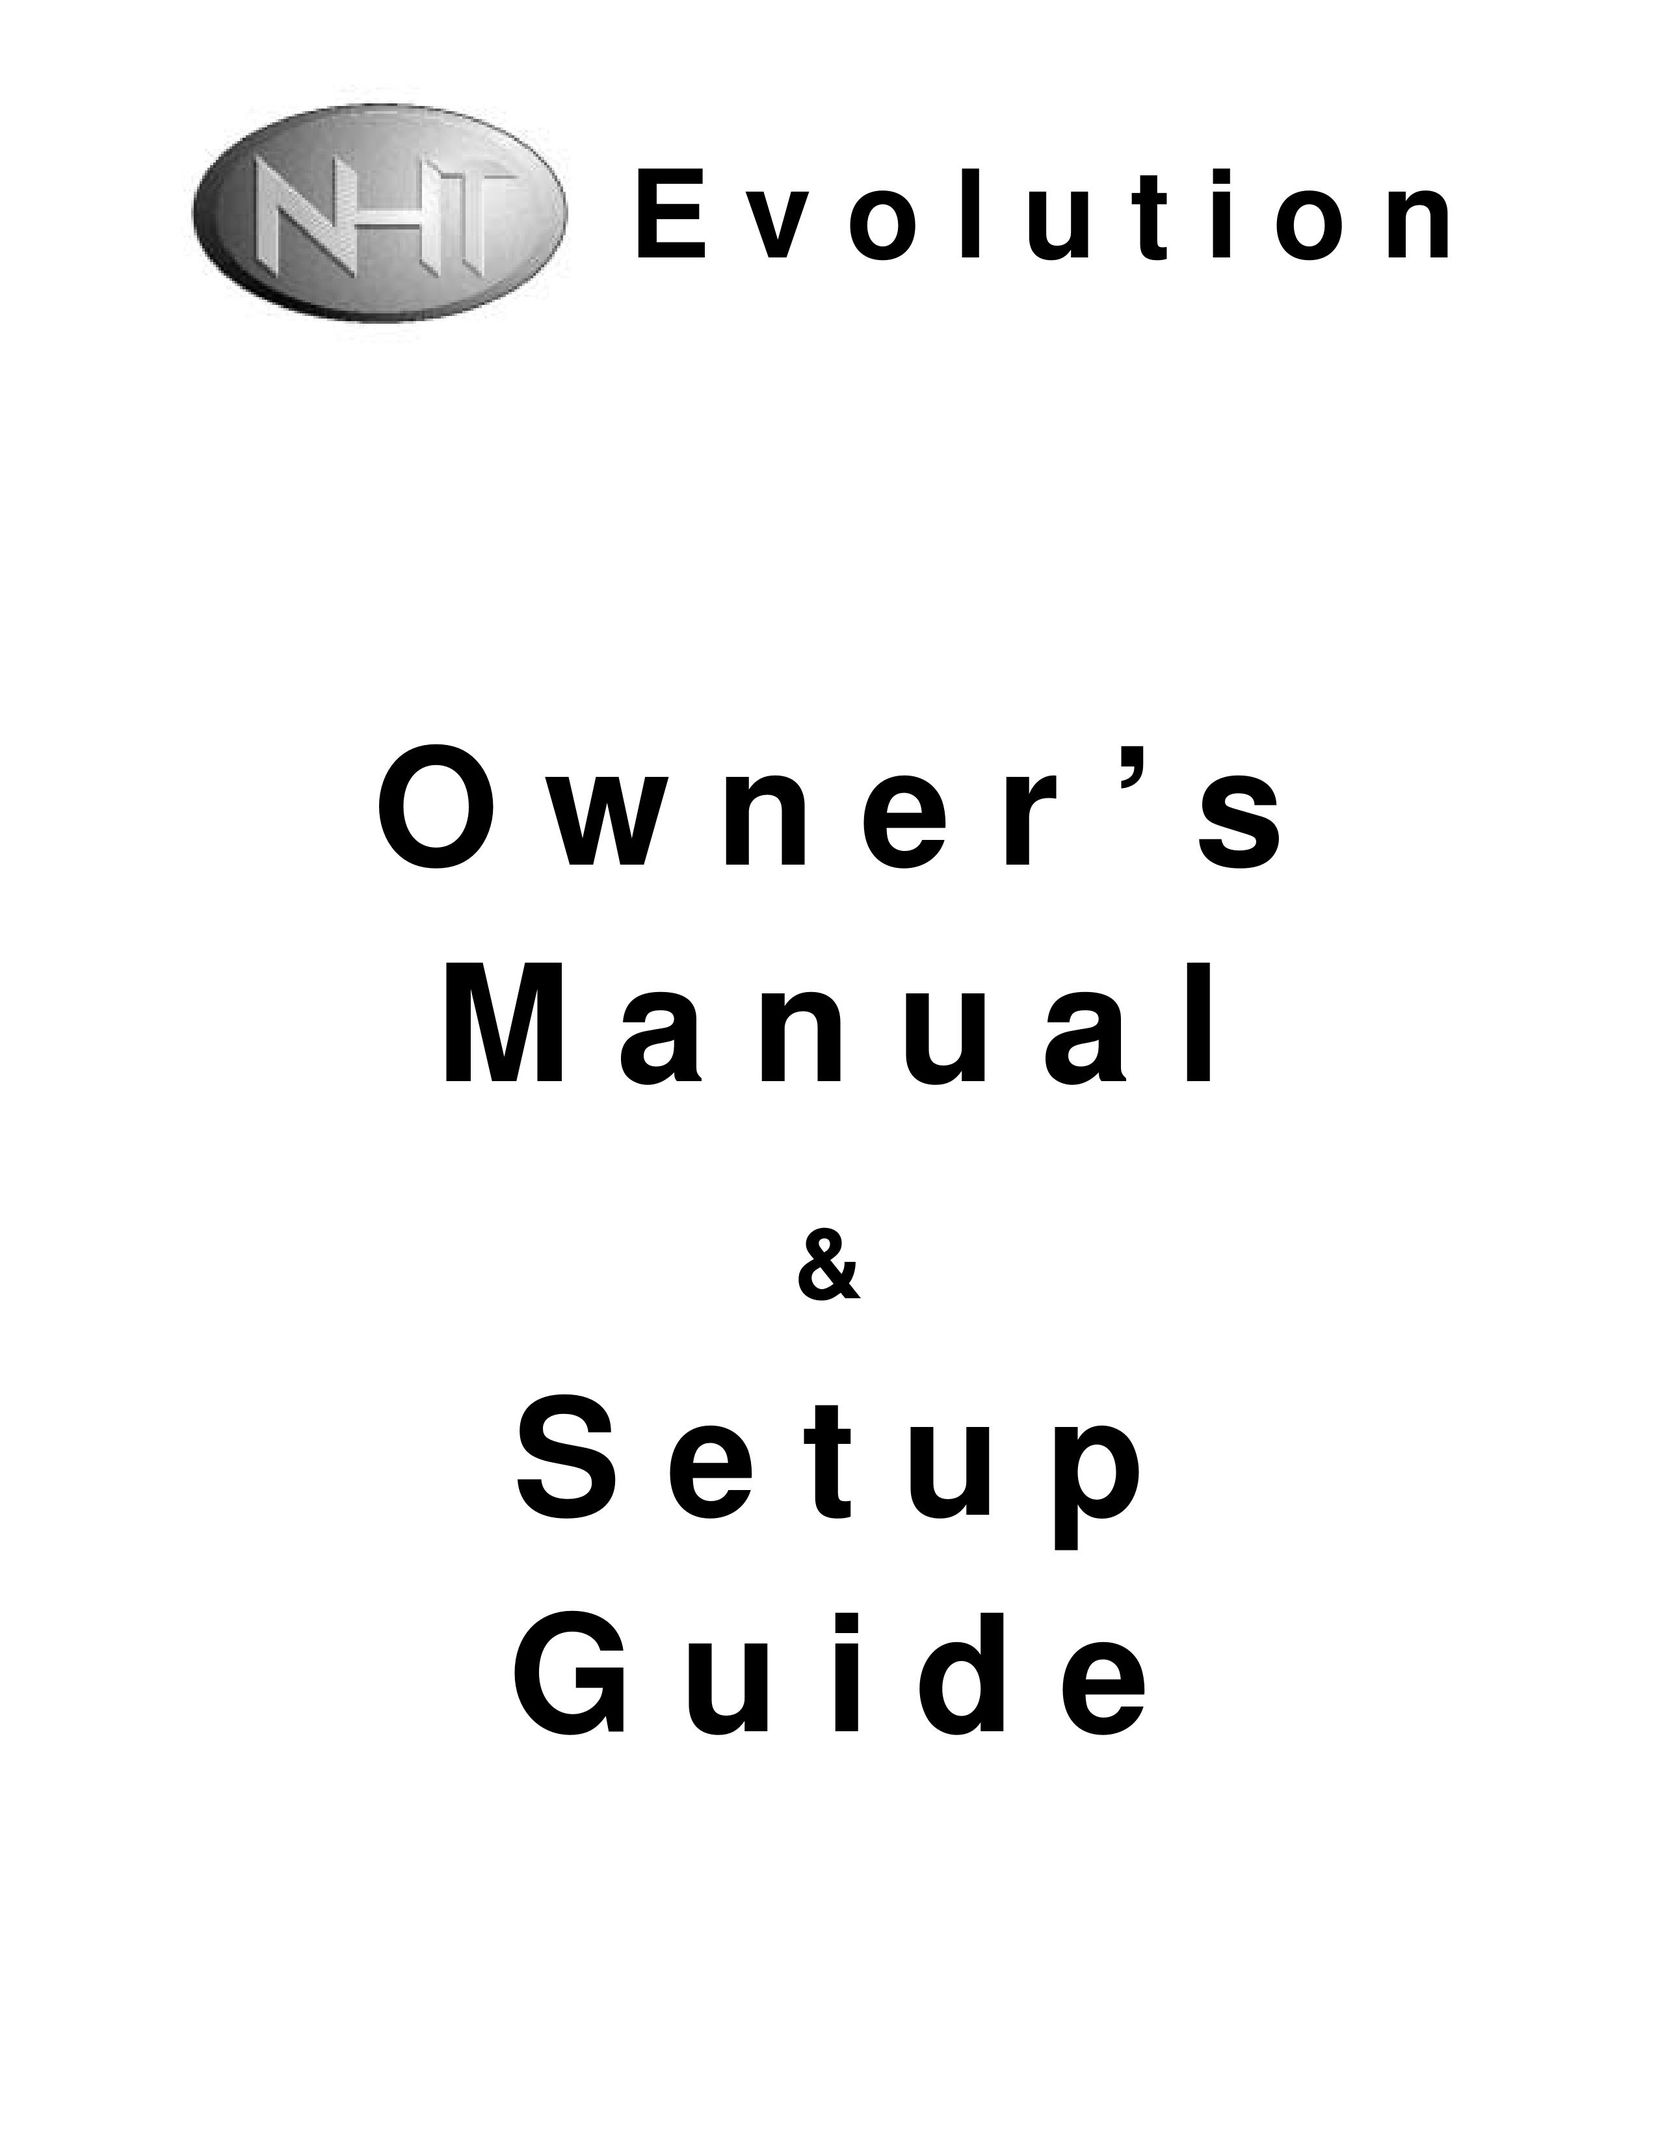 NHT Evolution System Speaker User Manual